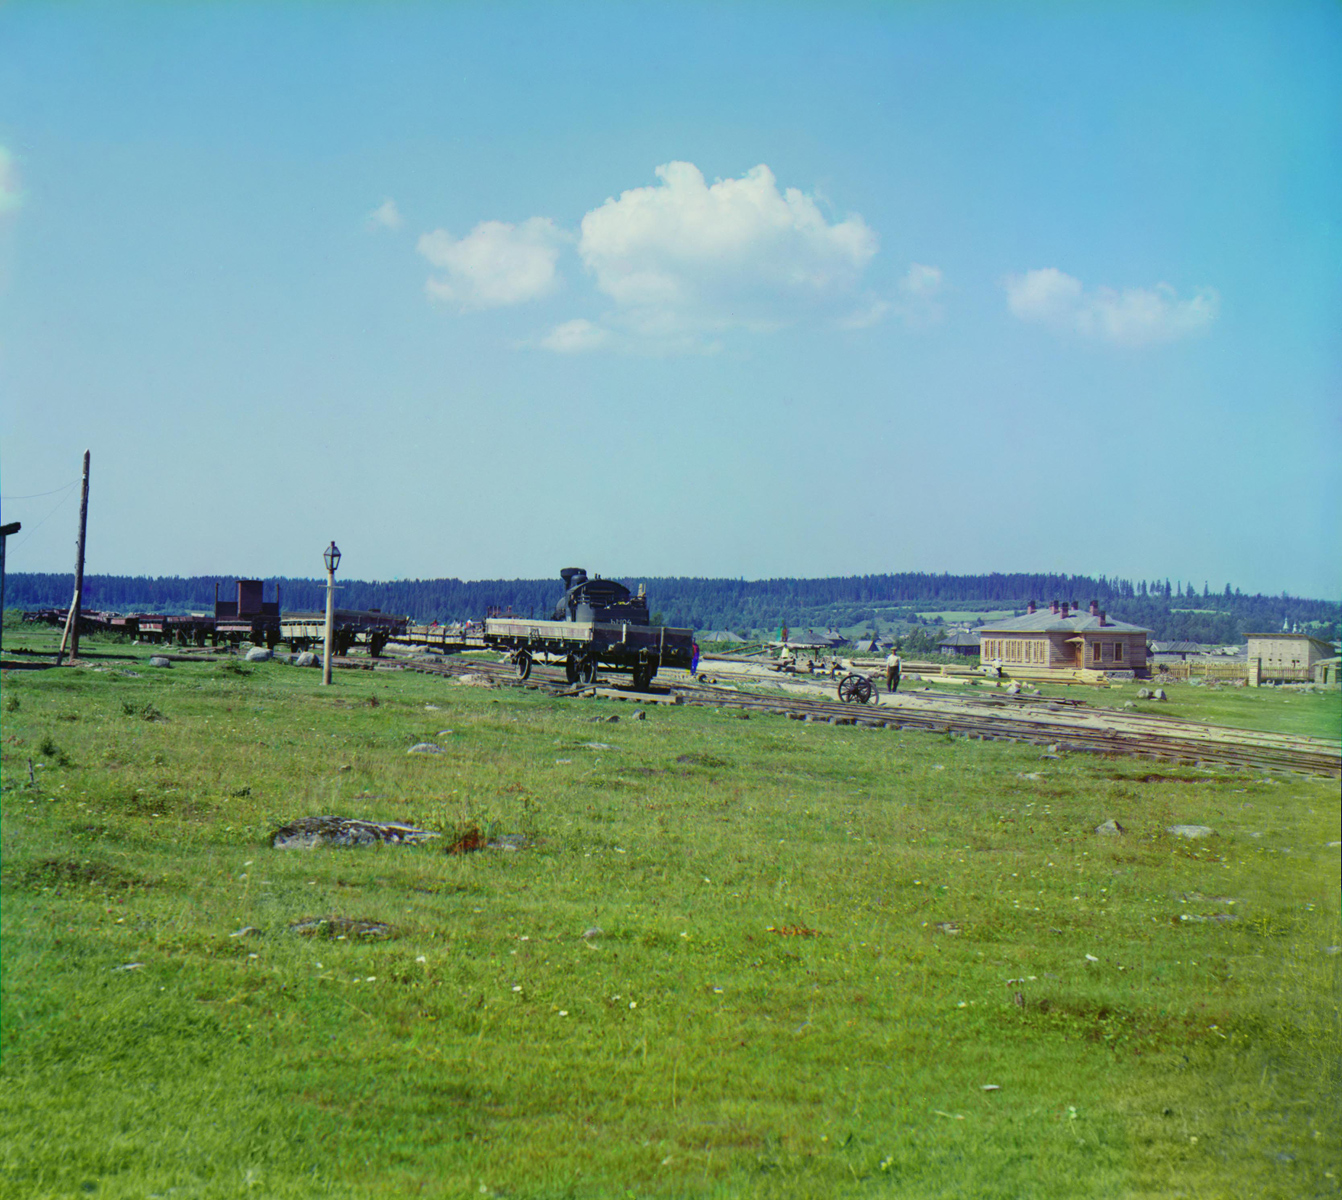 1916. General view of the Golikovka halt on the Olenets railroad